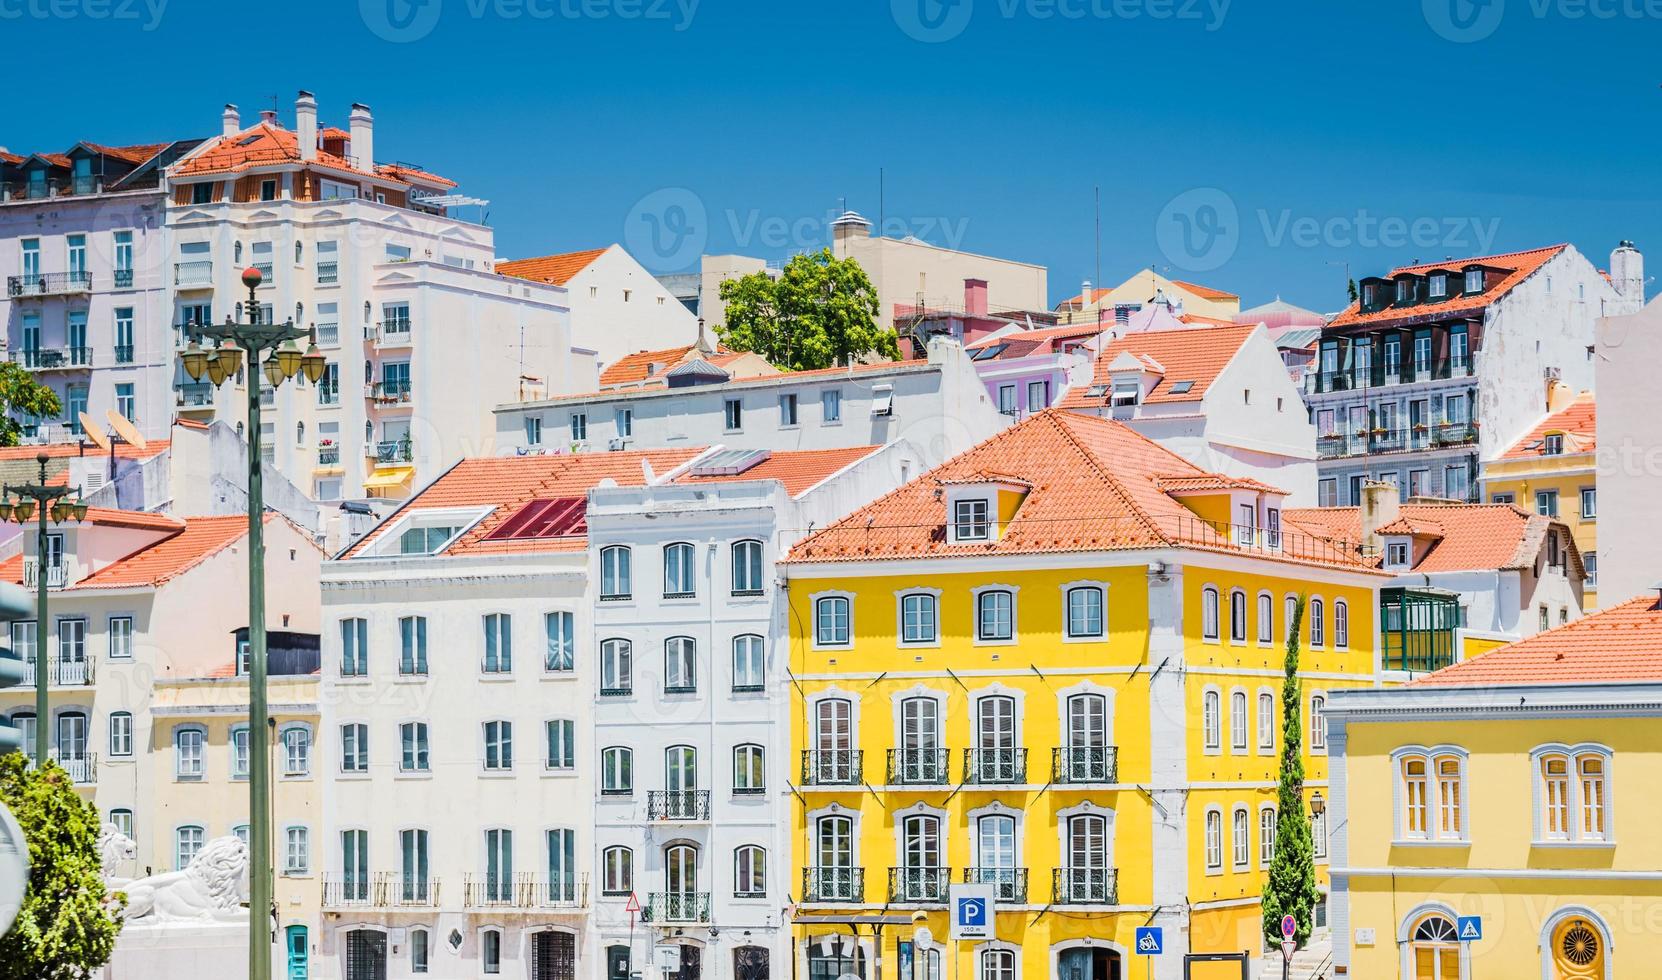 Portugal, Lissabon in de zomer, straat van Lissabon, mooi geel huis tussen witte huizen in Lissabon foto